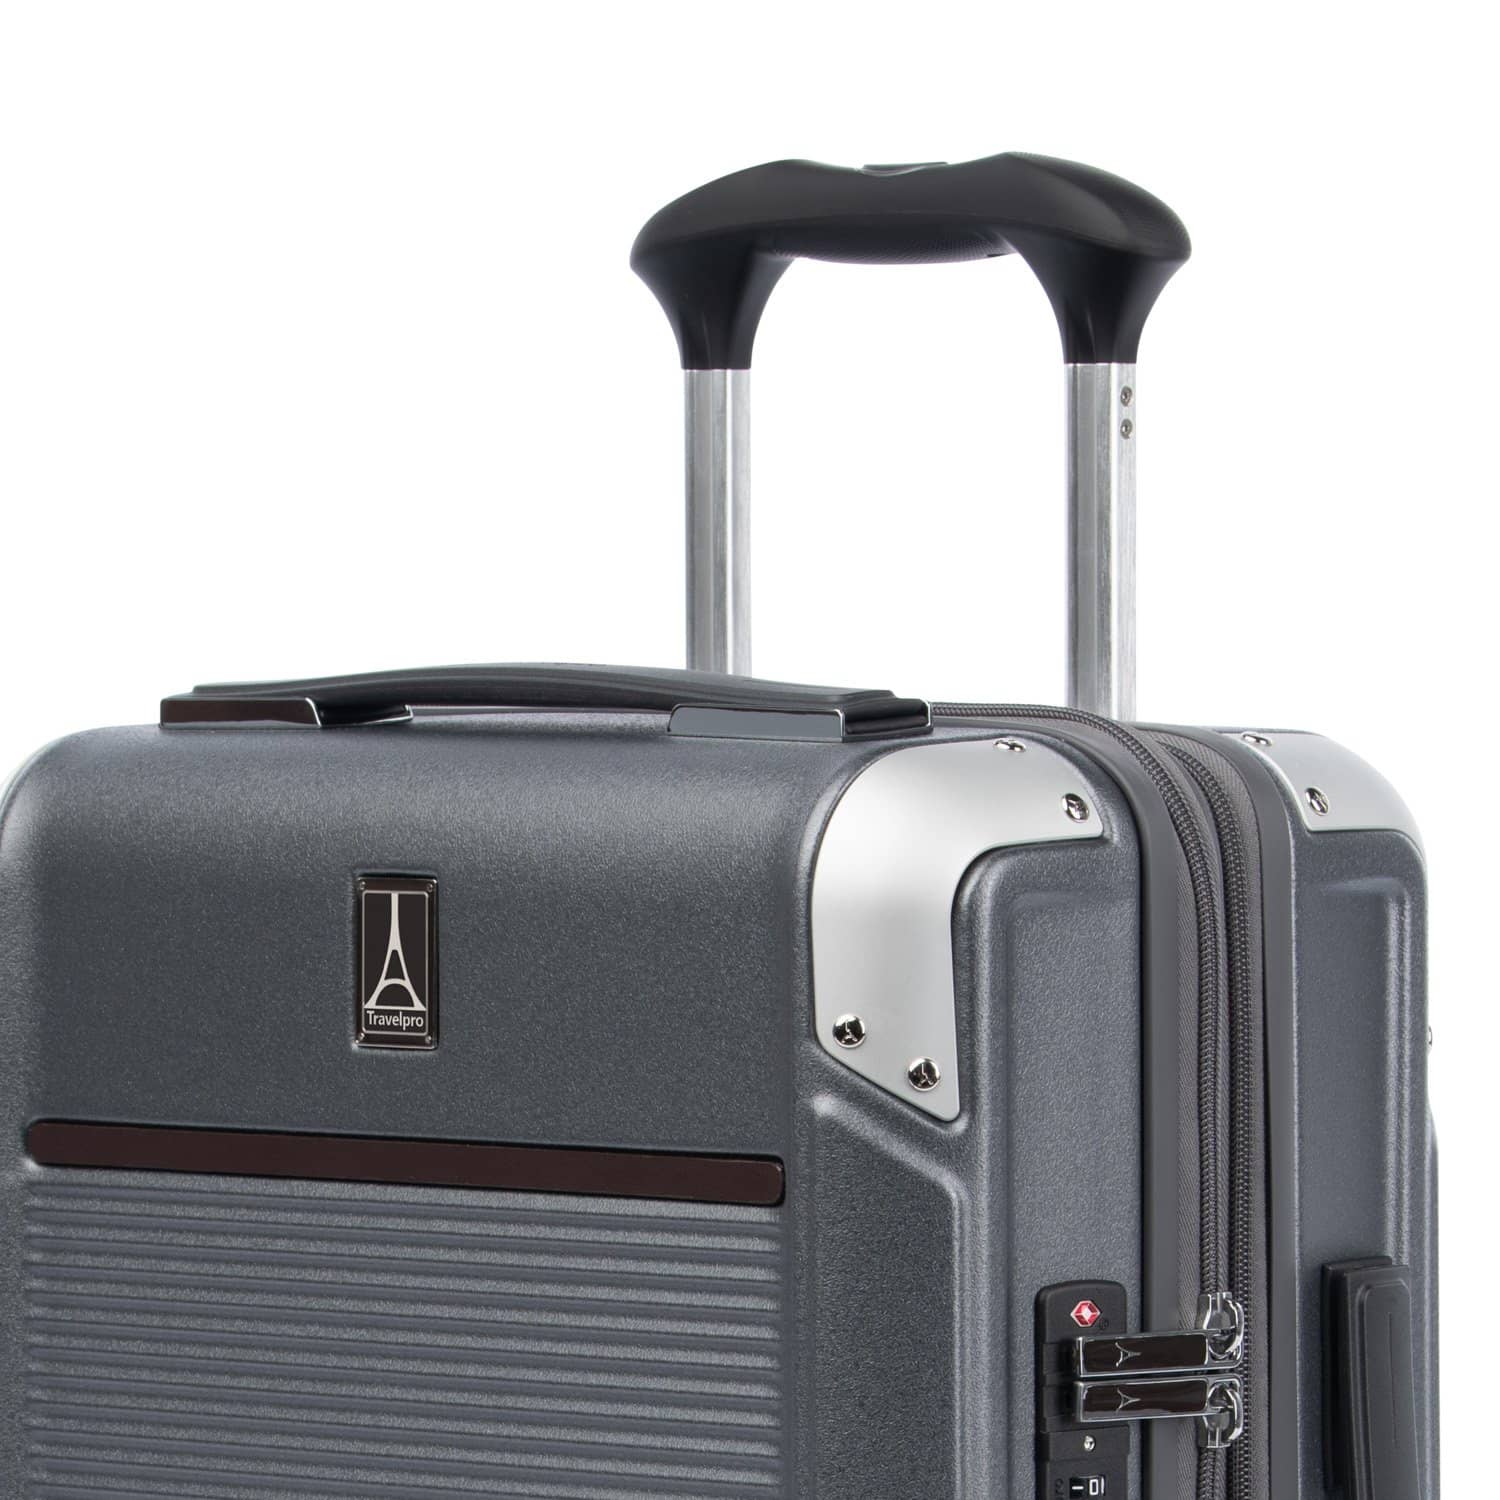 Travelpro RoundTrip Hardside Expandable Spinner Luggage, Navy, 2-Piece Set (20/25)